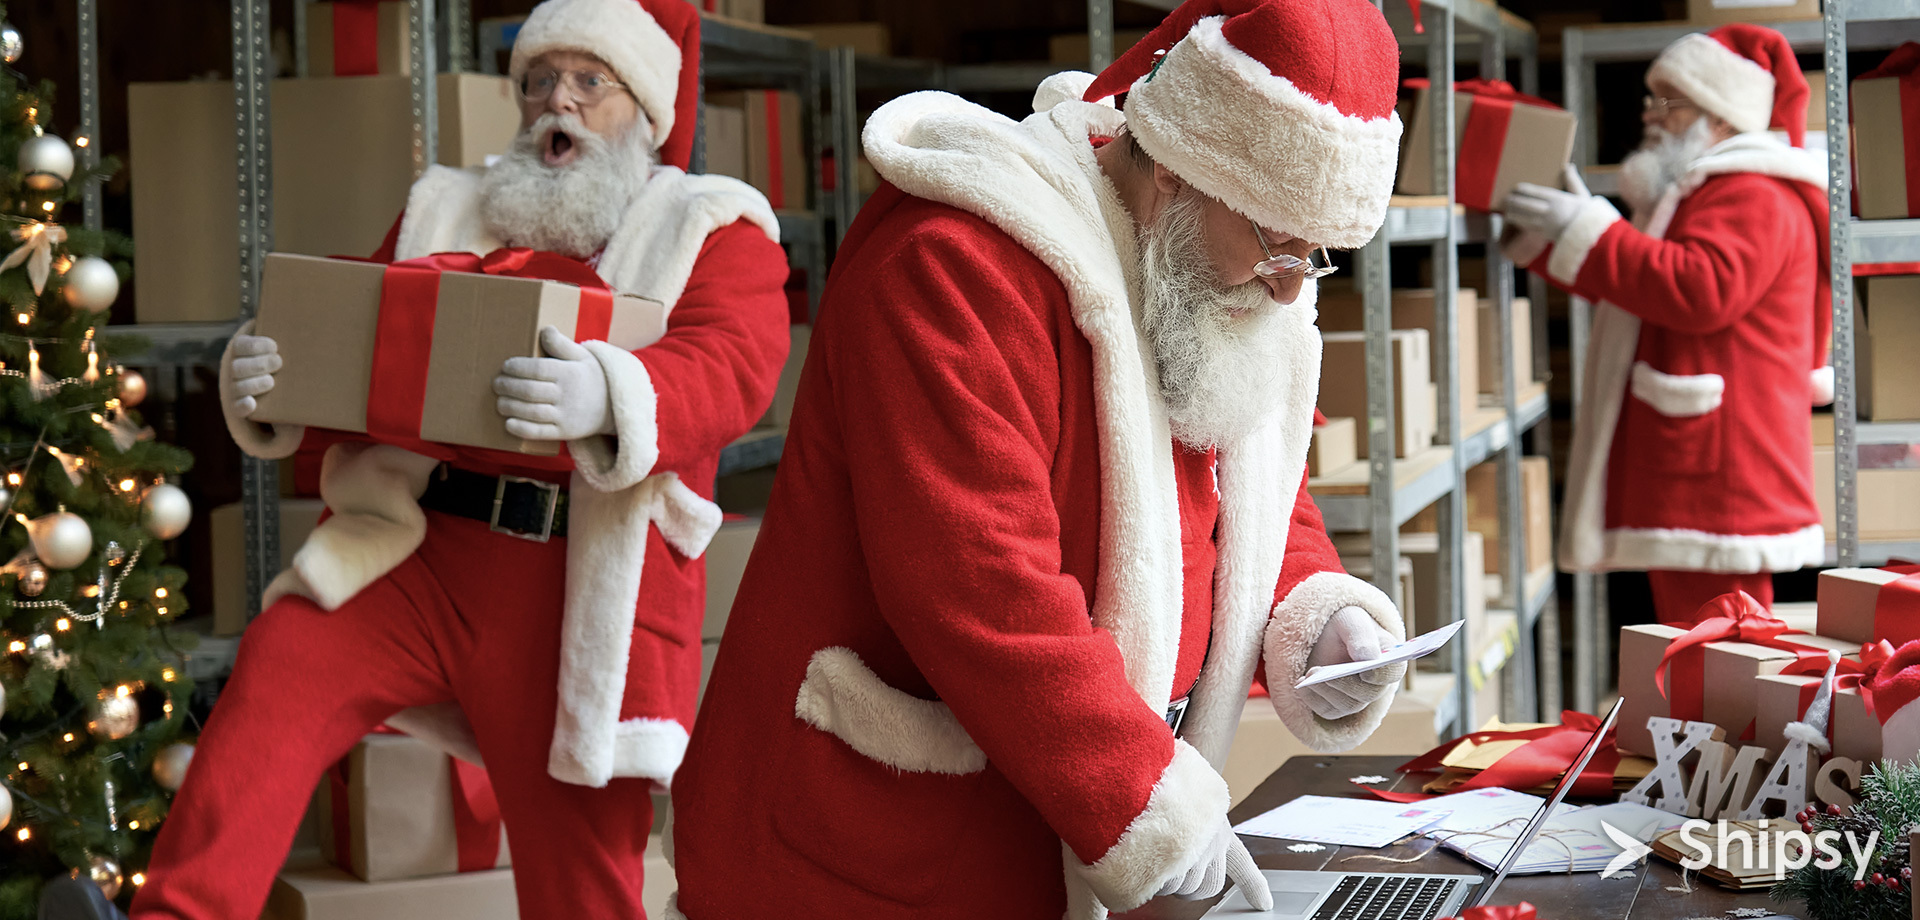 Sleigh Your Deliveries Like Santa This Holiday Season